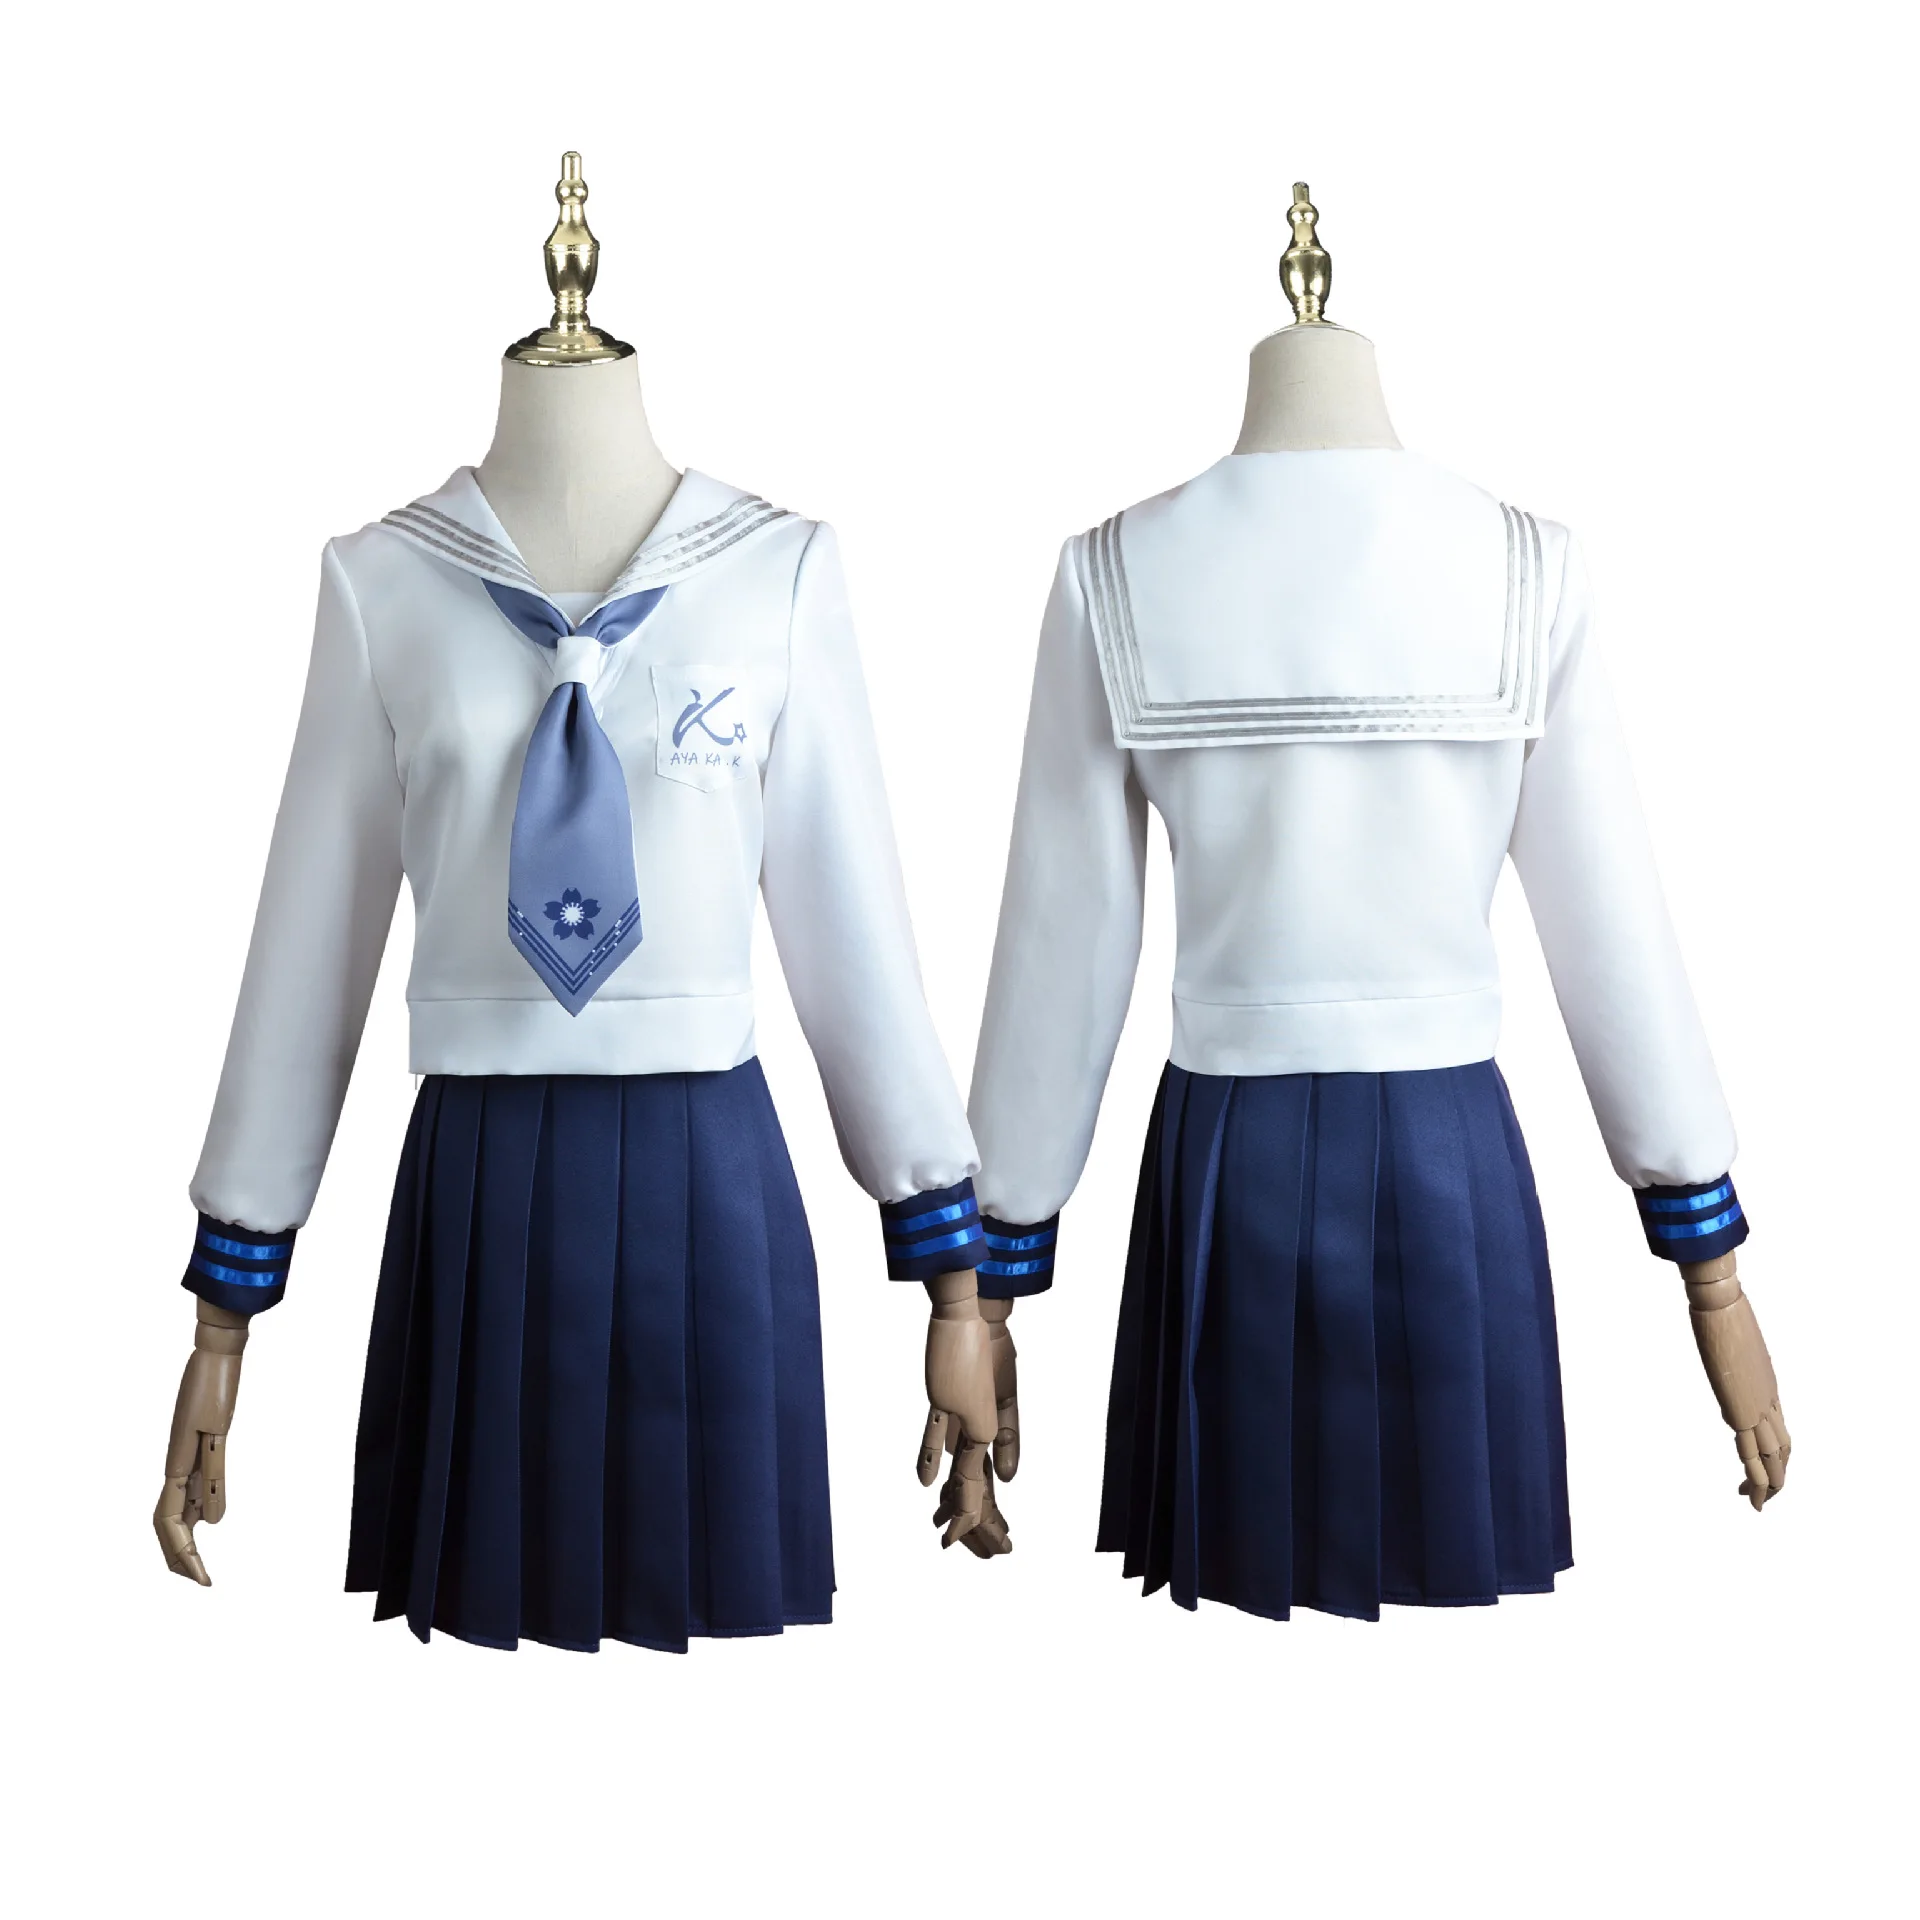 Brdwn Genshin Impact Unisex Камисато Аяка Аято perika Jk uniformi Držanje par Cosplay odijelo